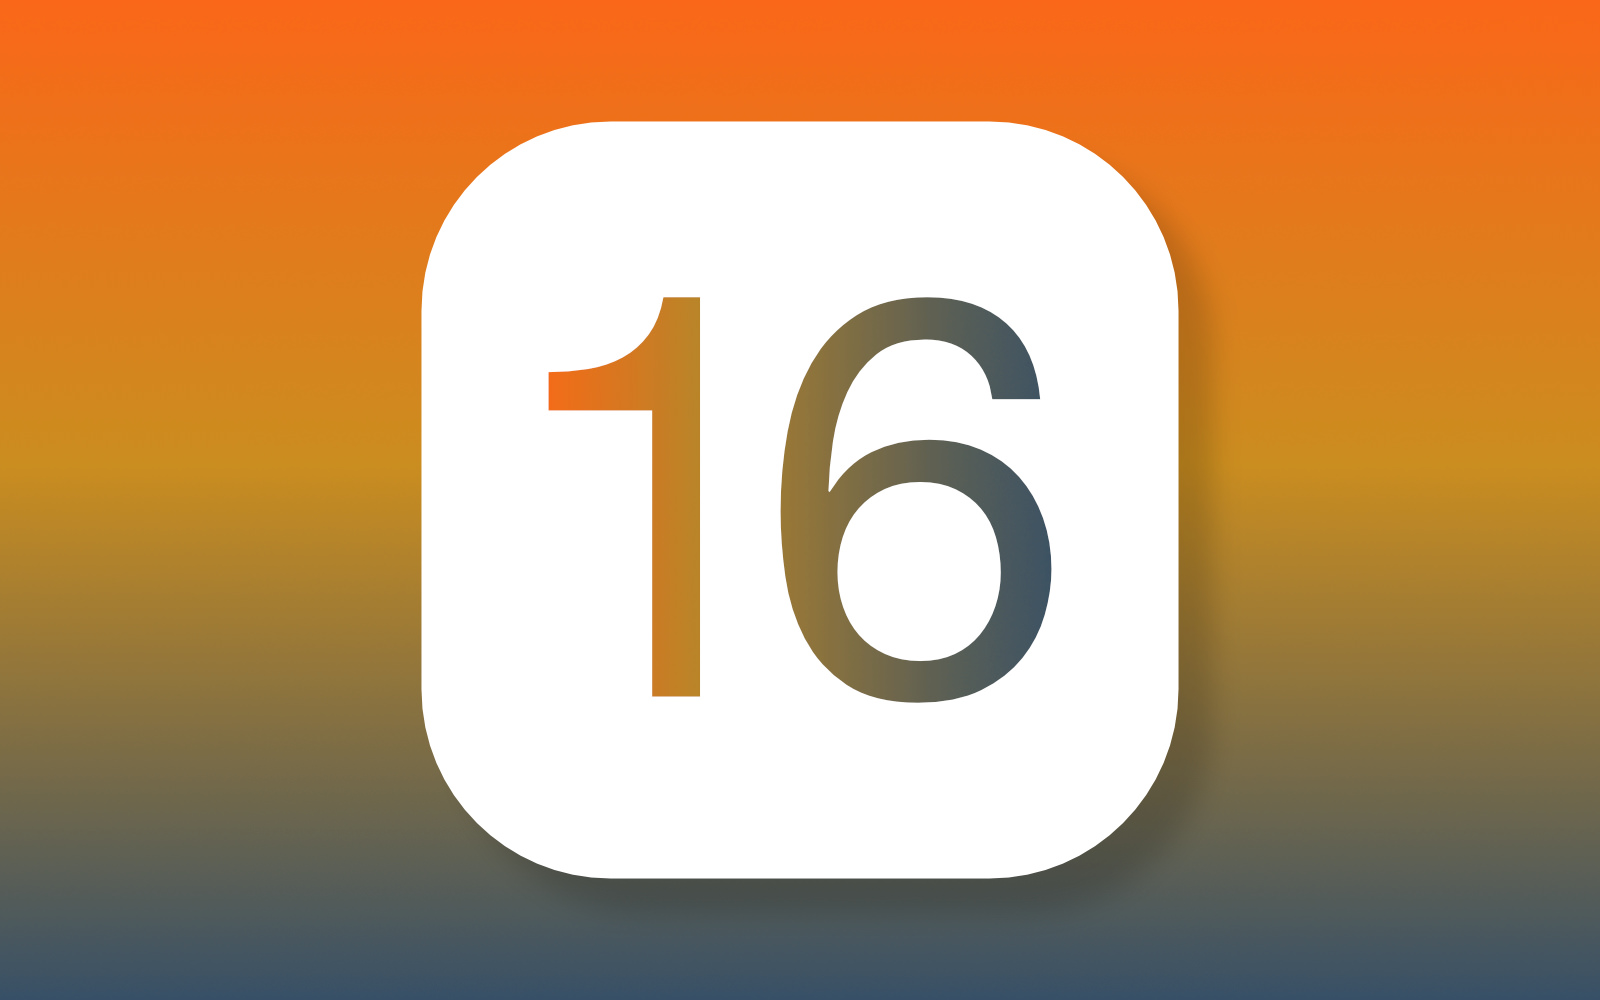 IOS16 Image icon